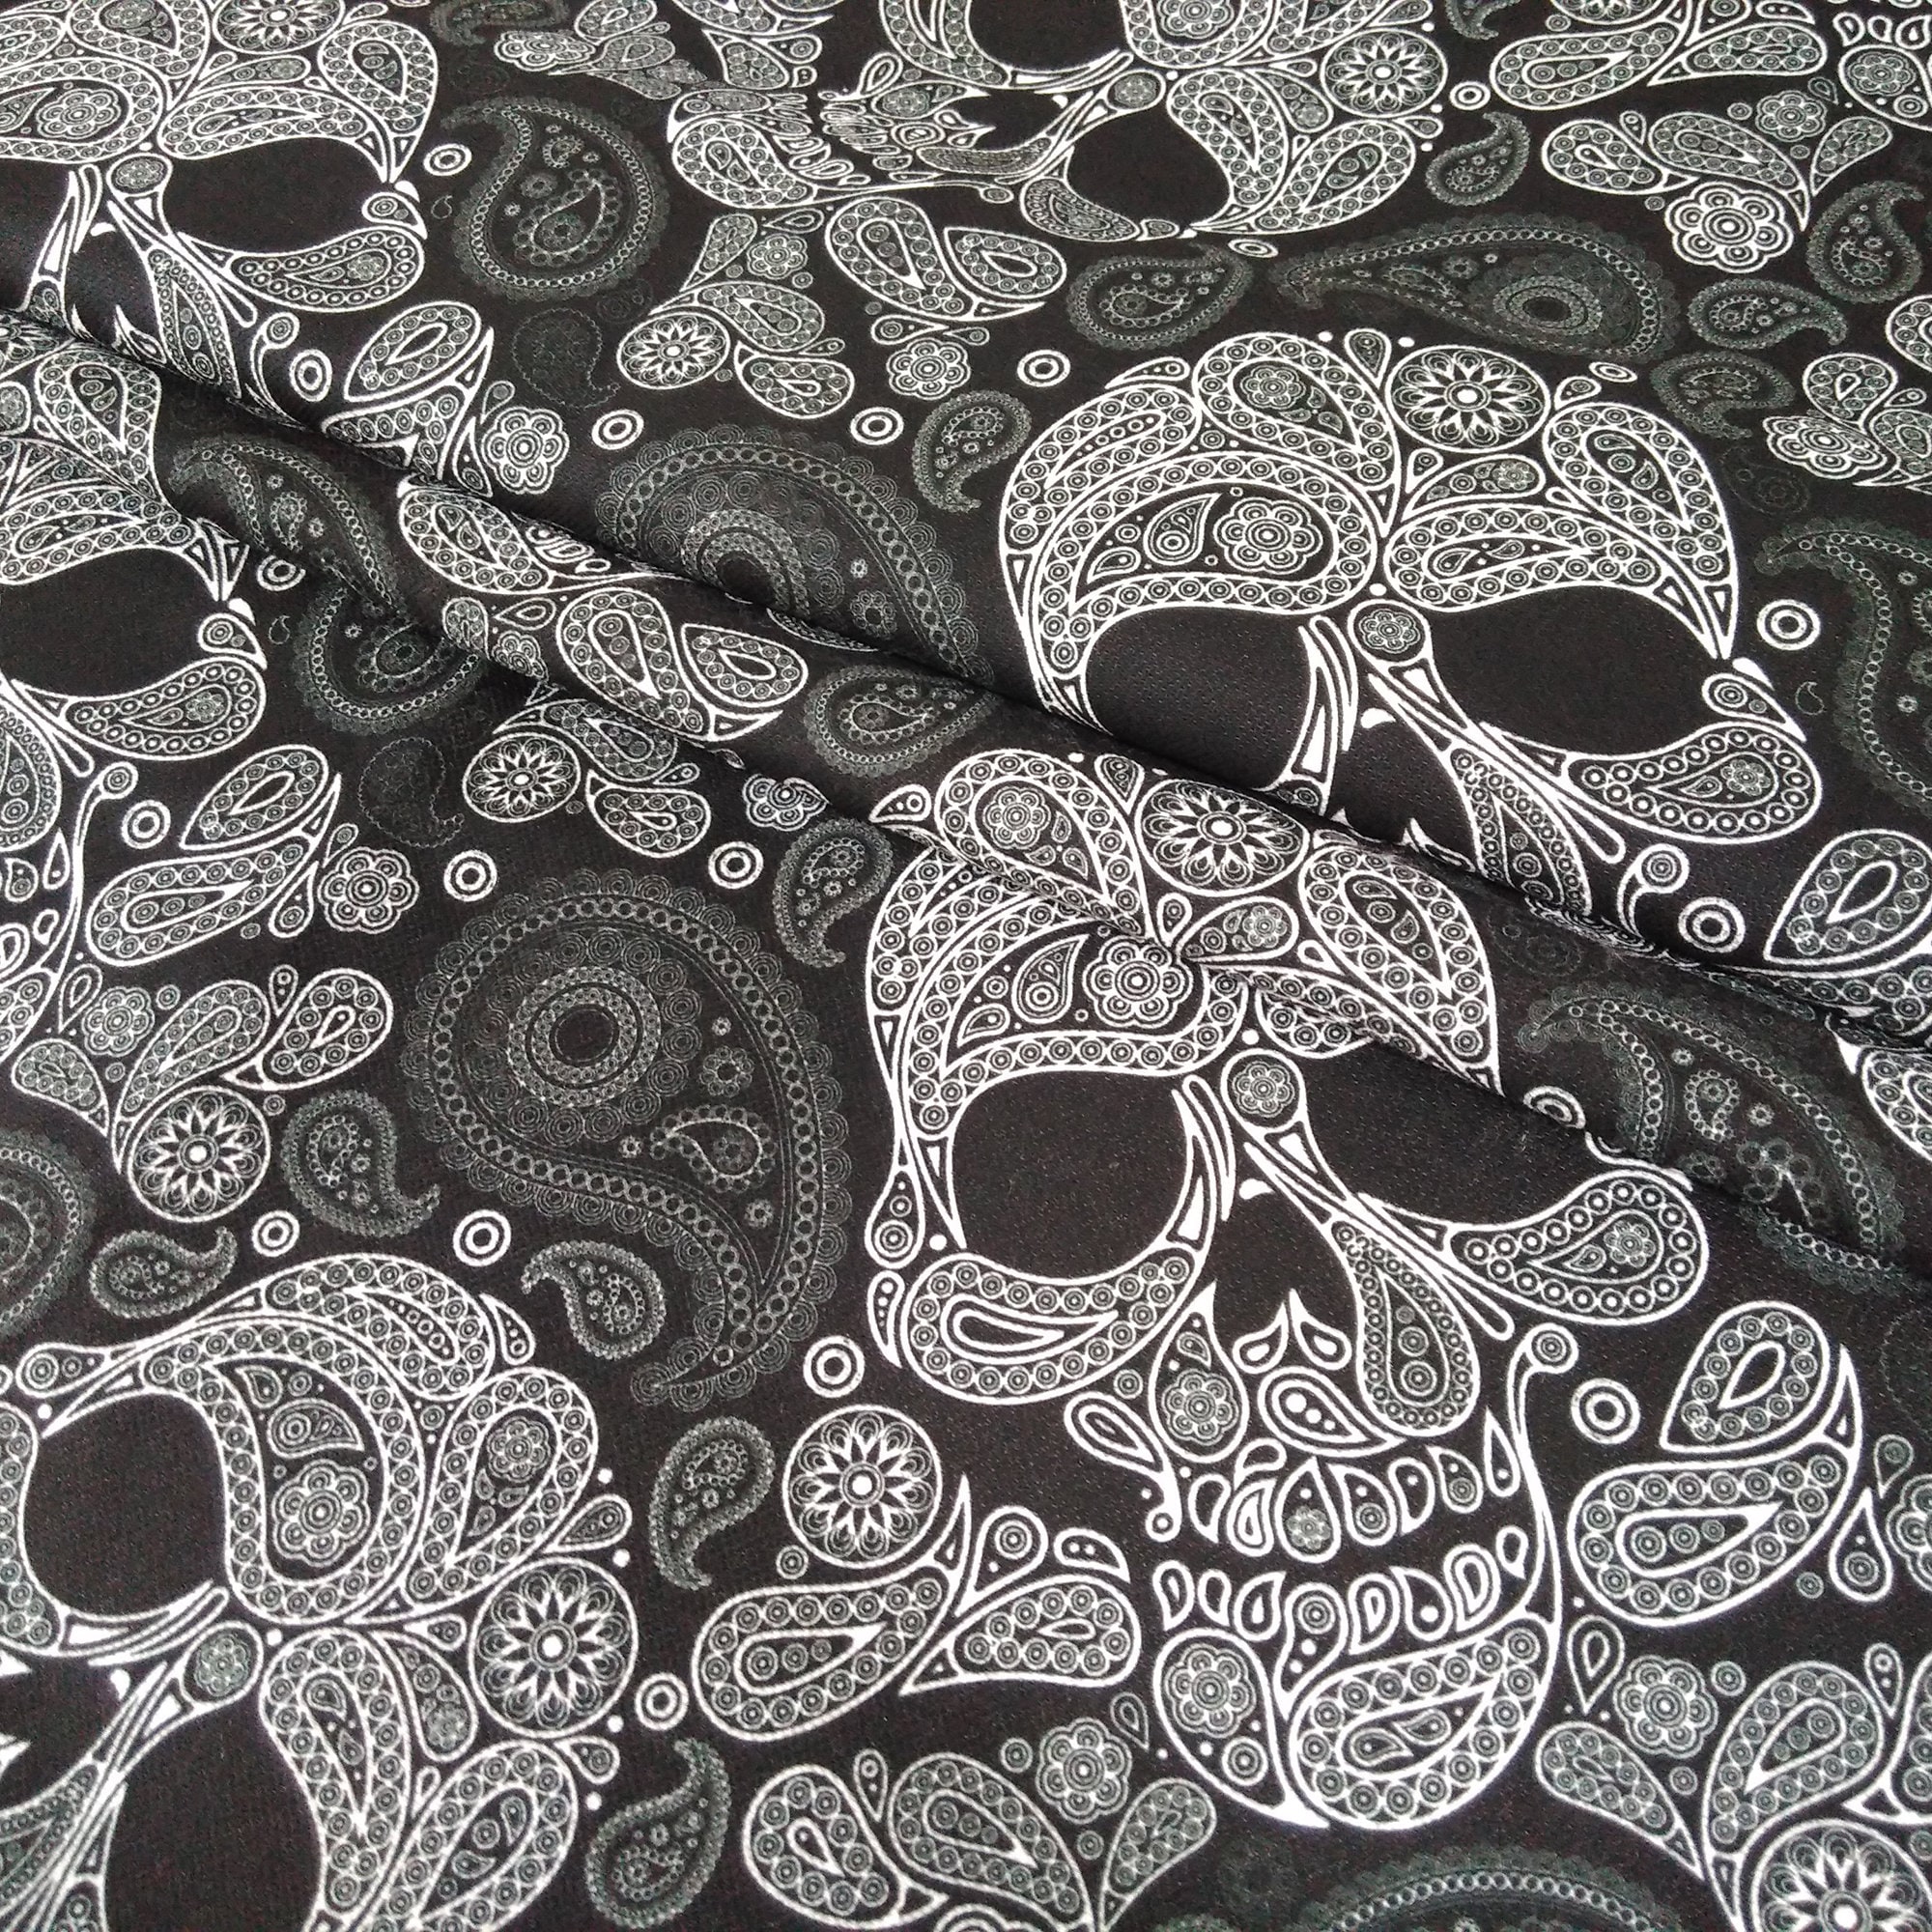 Skull Flower Paisley Patterned Digital Printed Black Fabric - Etsy